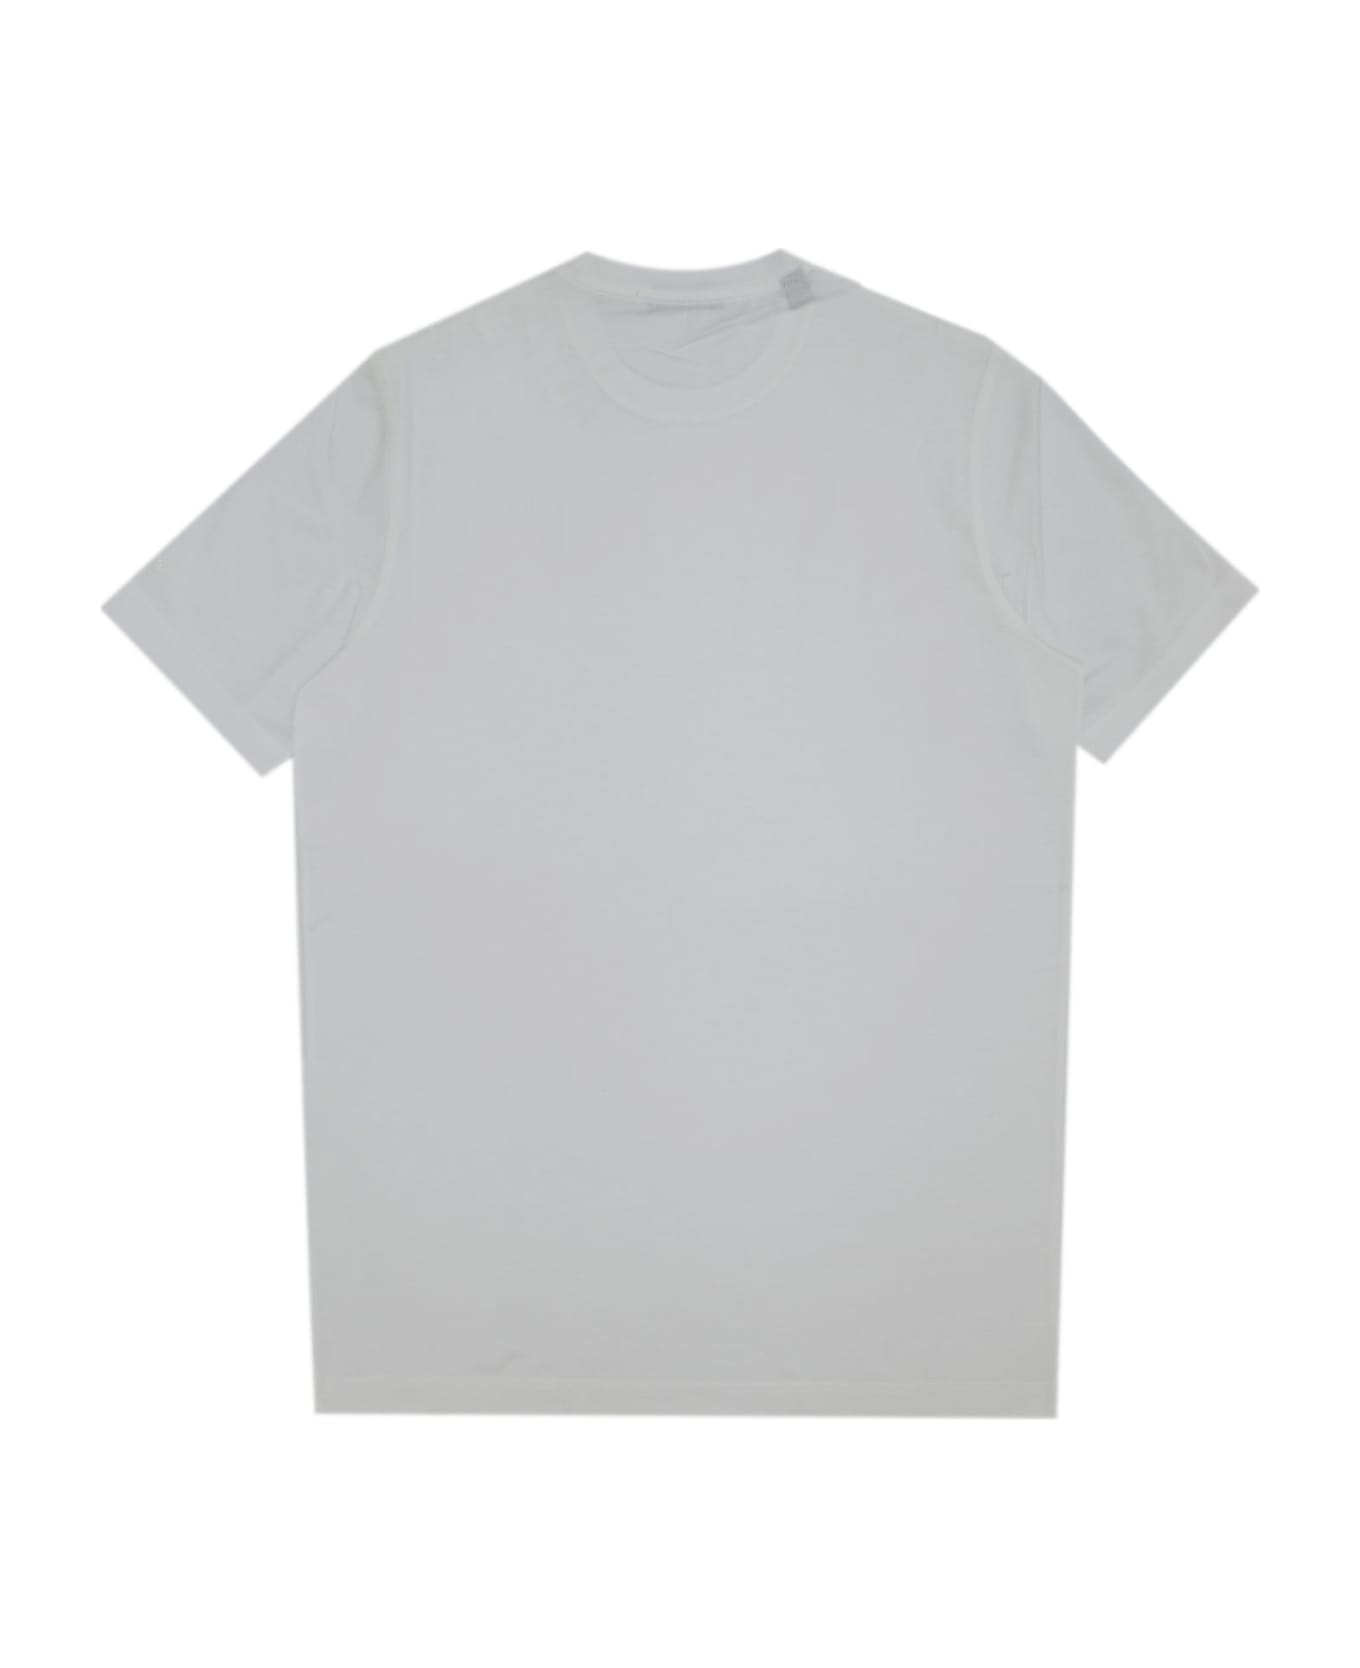 Emanuel Ungaro T-shirt - White